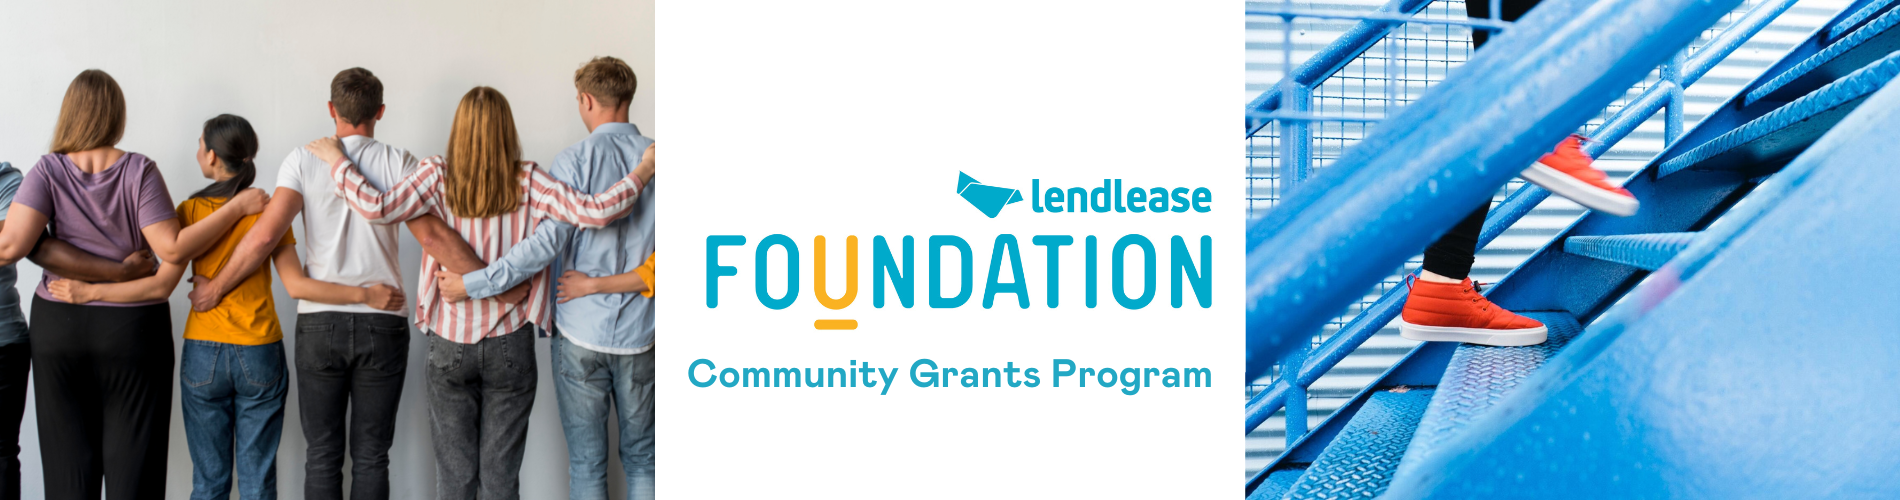 LENDLEASE FOUNDATION COMMUNITY GRANTS PROGRAM.png